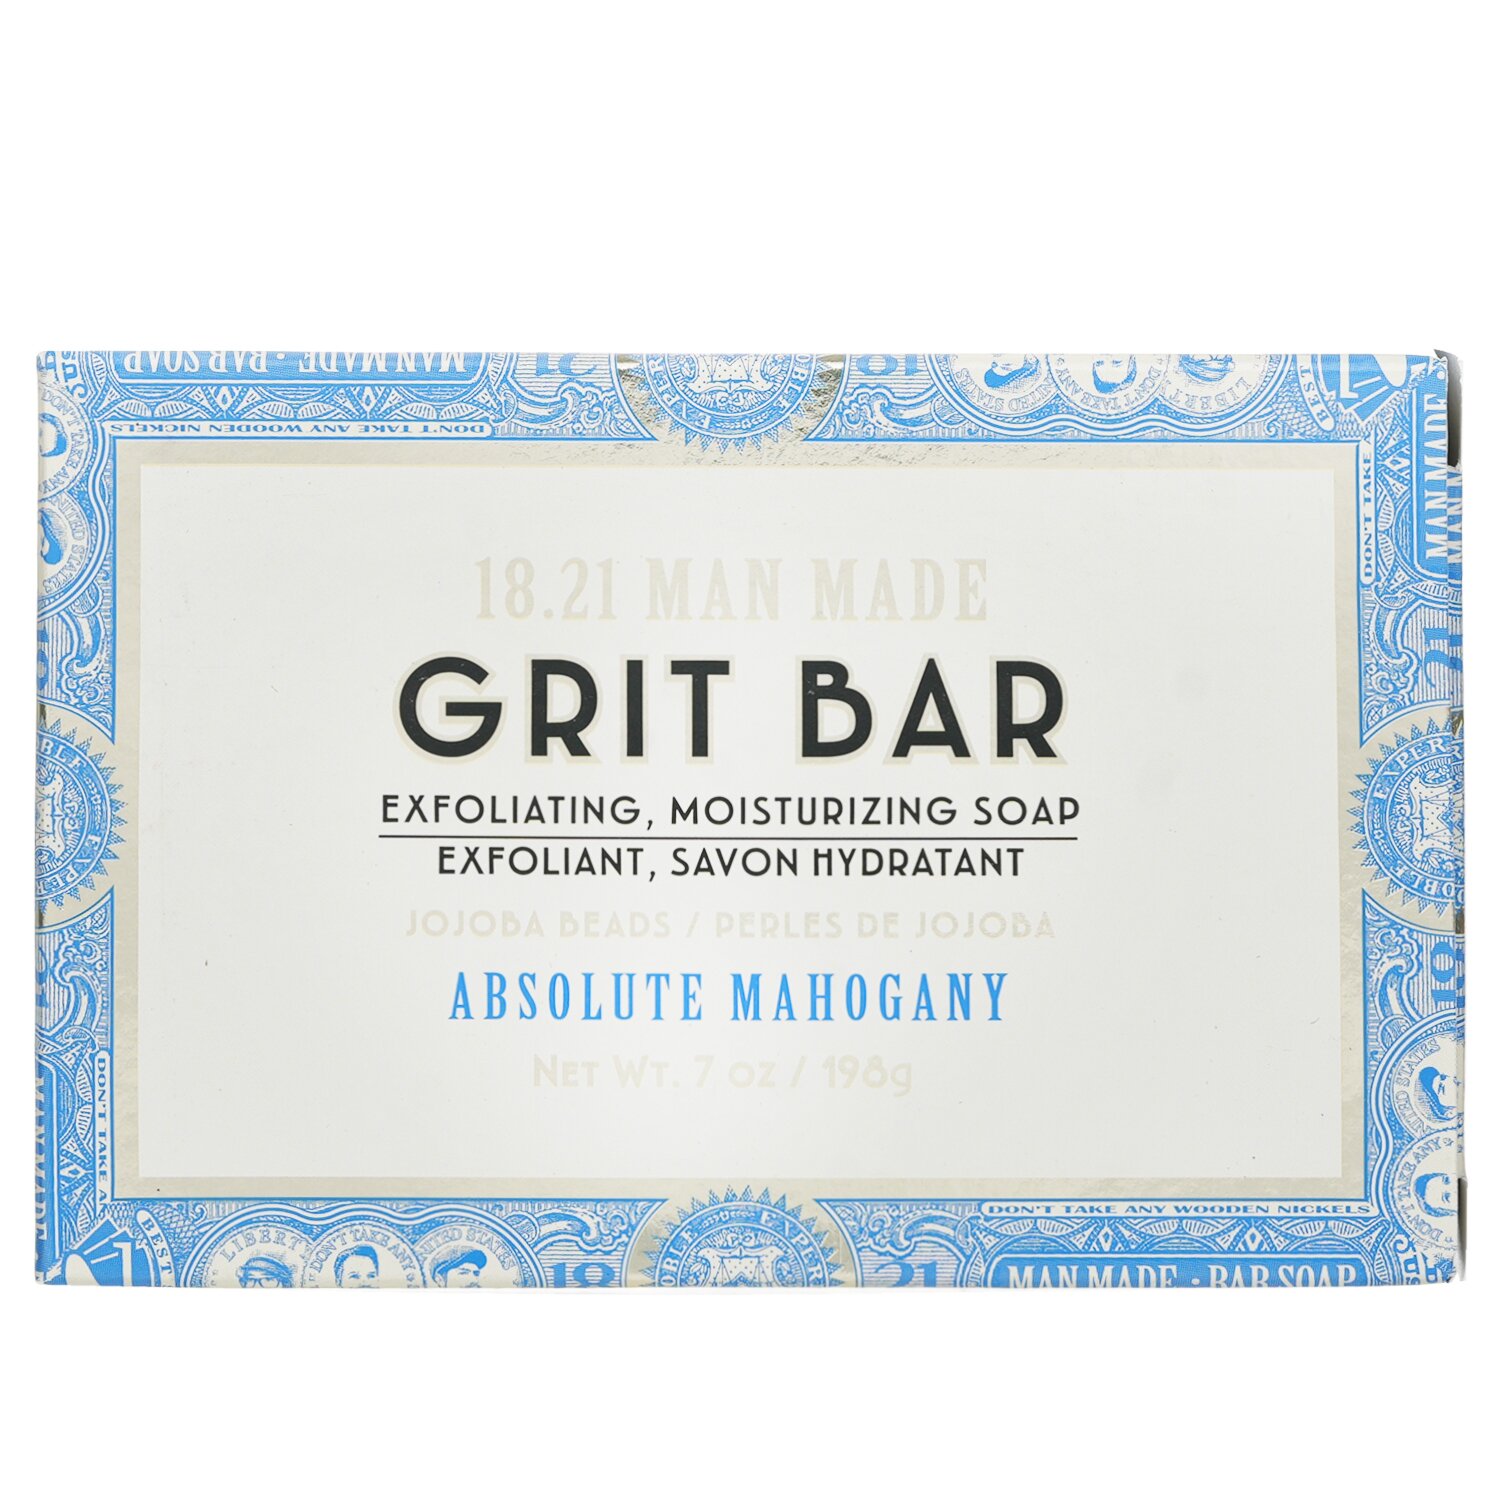 18.21 Man Made Grit Bar - Exfoliating, Moisturizing Soap 198g/7oz